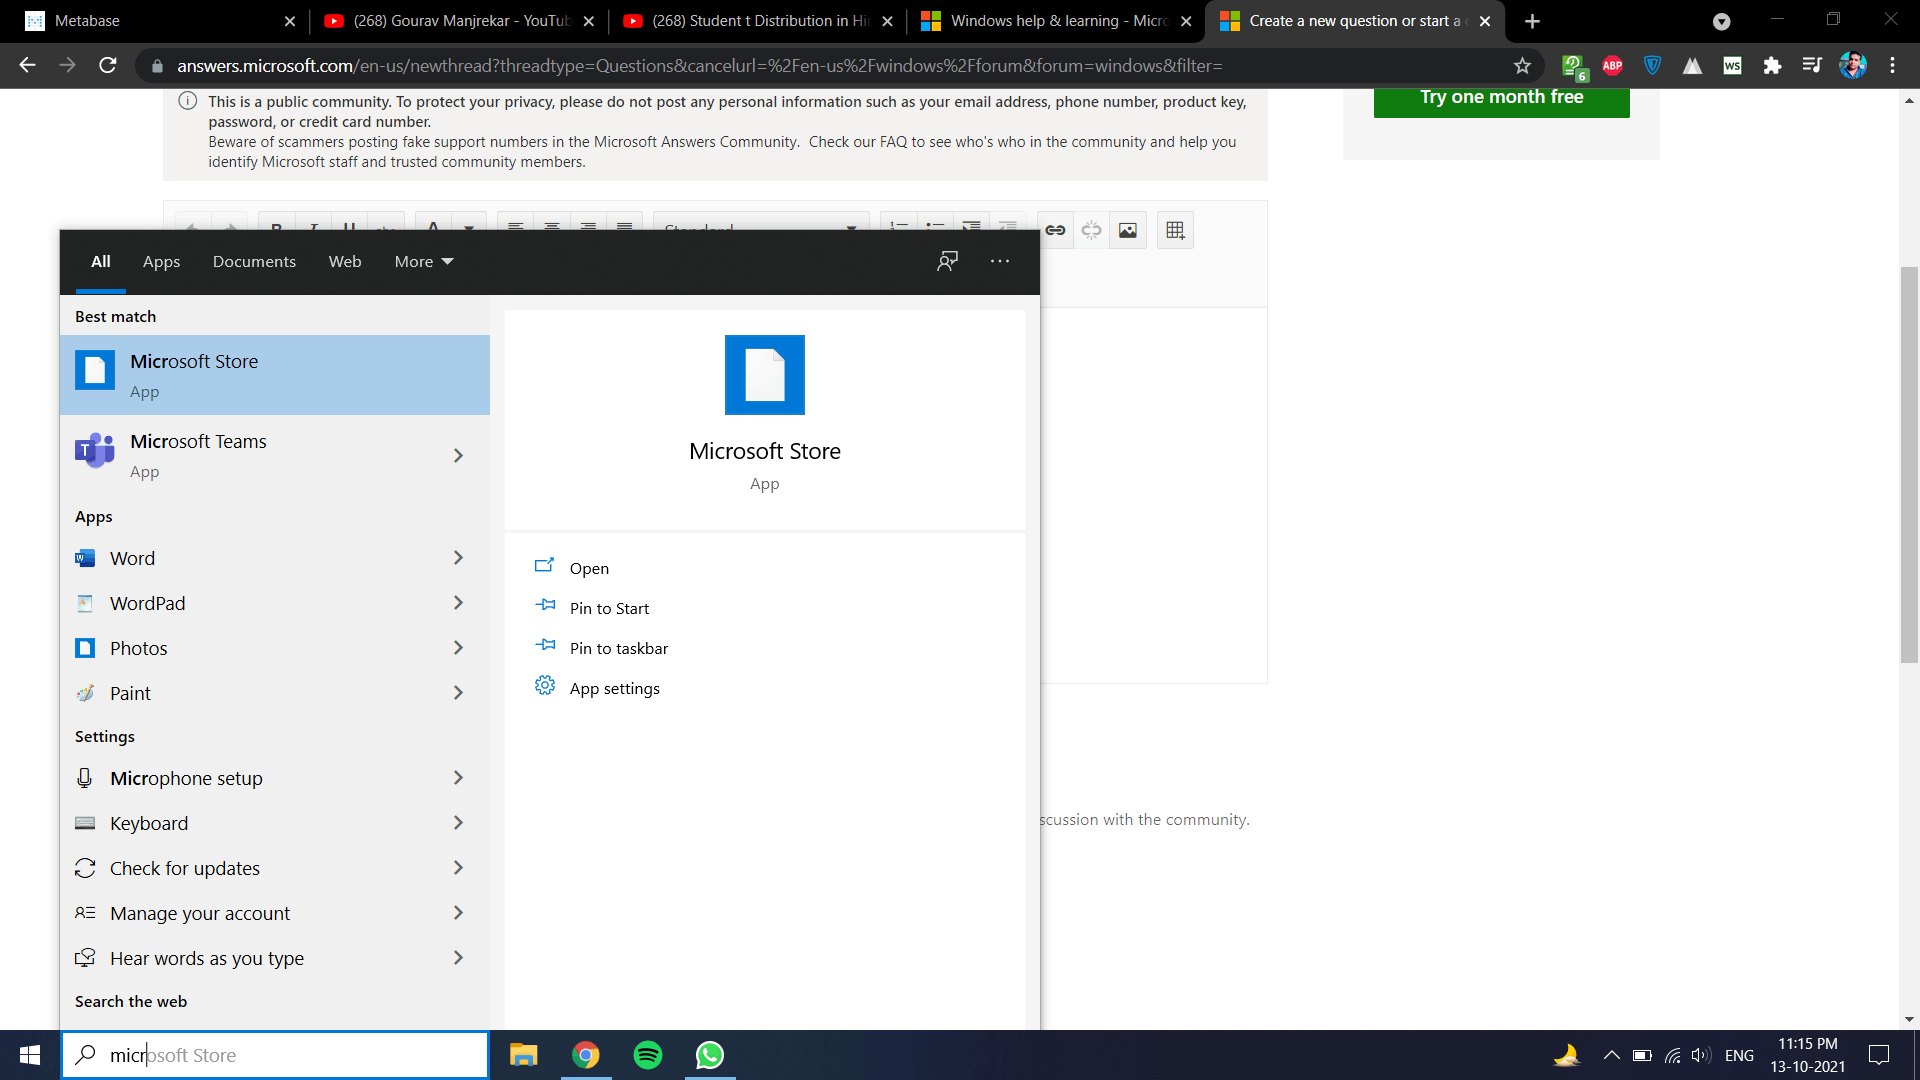 Windows help & learning